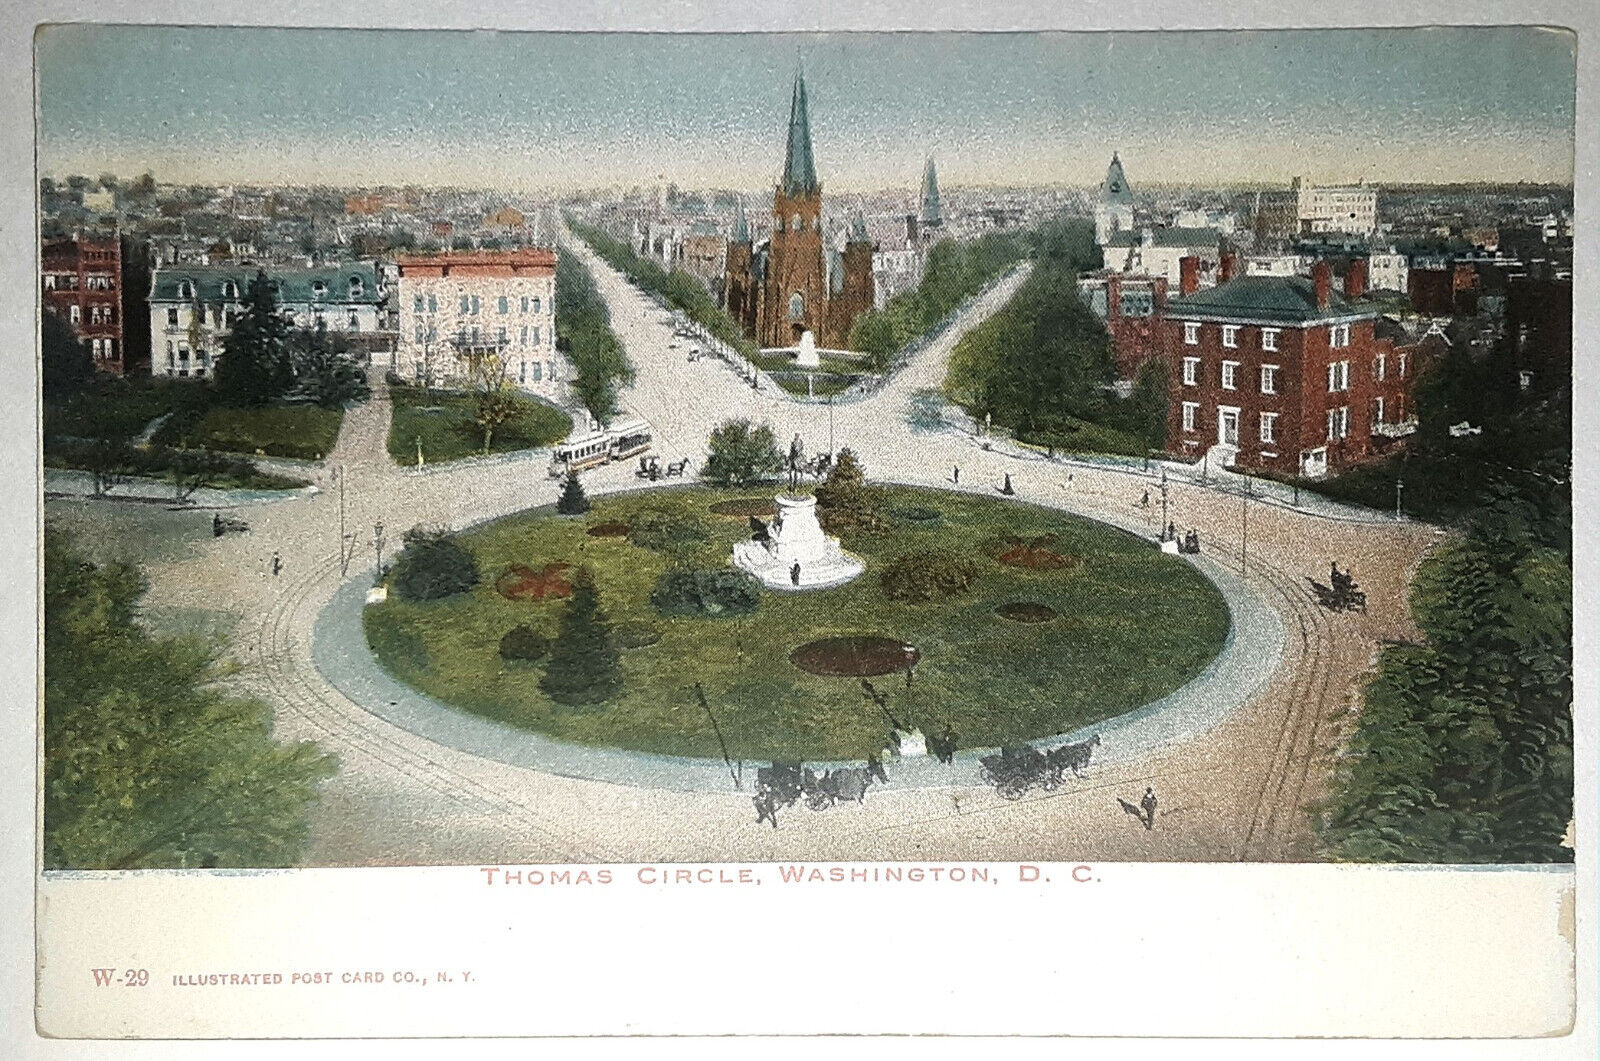 Thomas Circle, Washington, D.C. DC, Illustrated Post Card Co. - Unposted